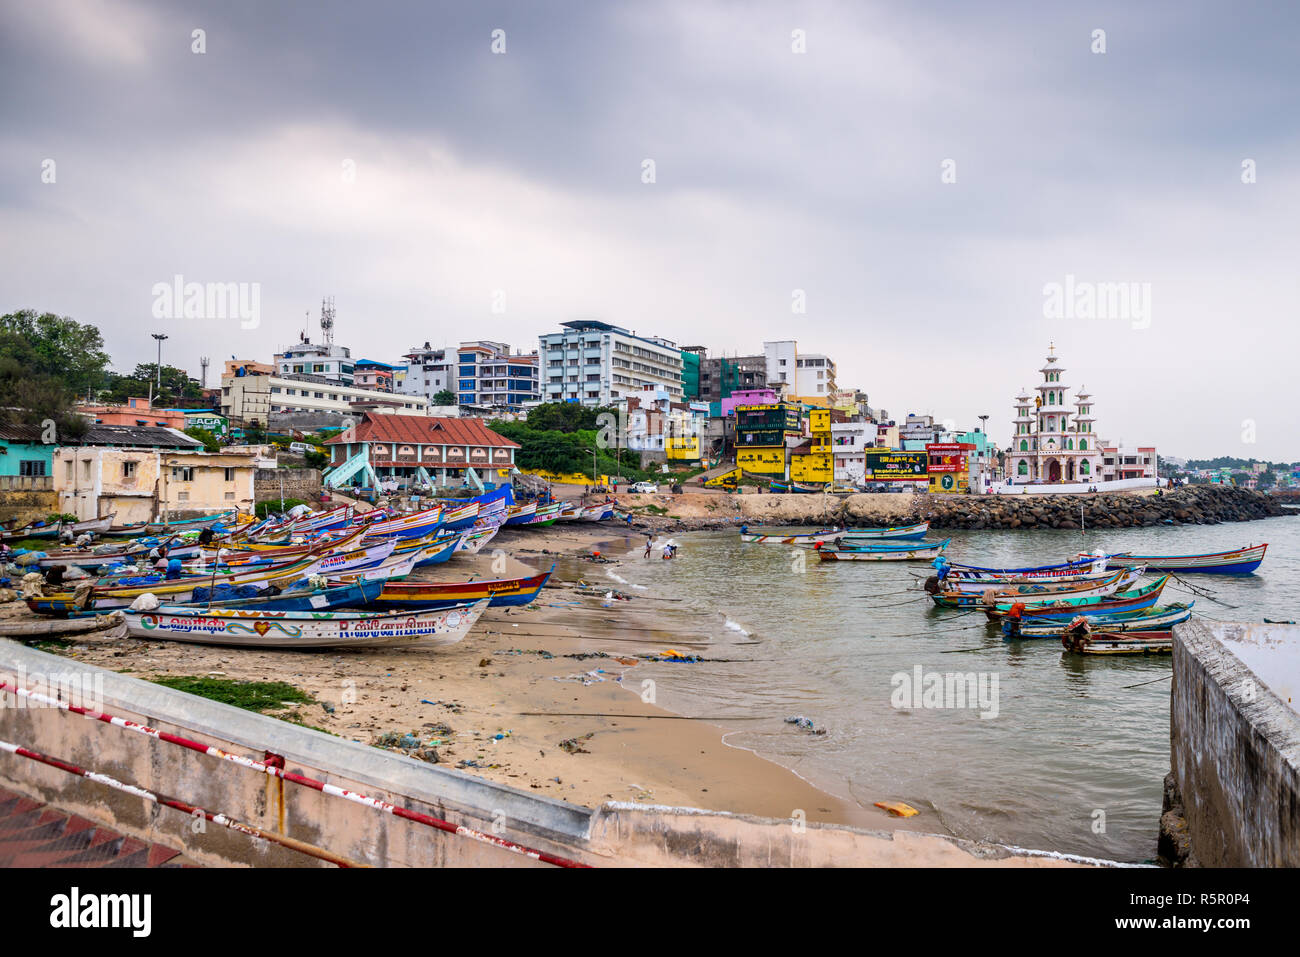 View of Kanyakumari Town with boats on beach Stock Photo